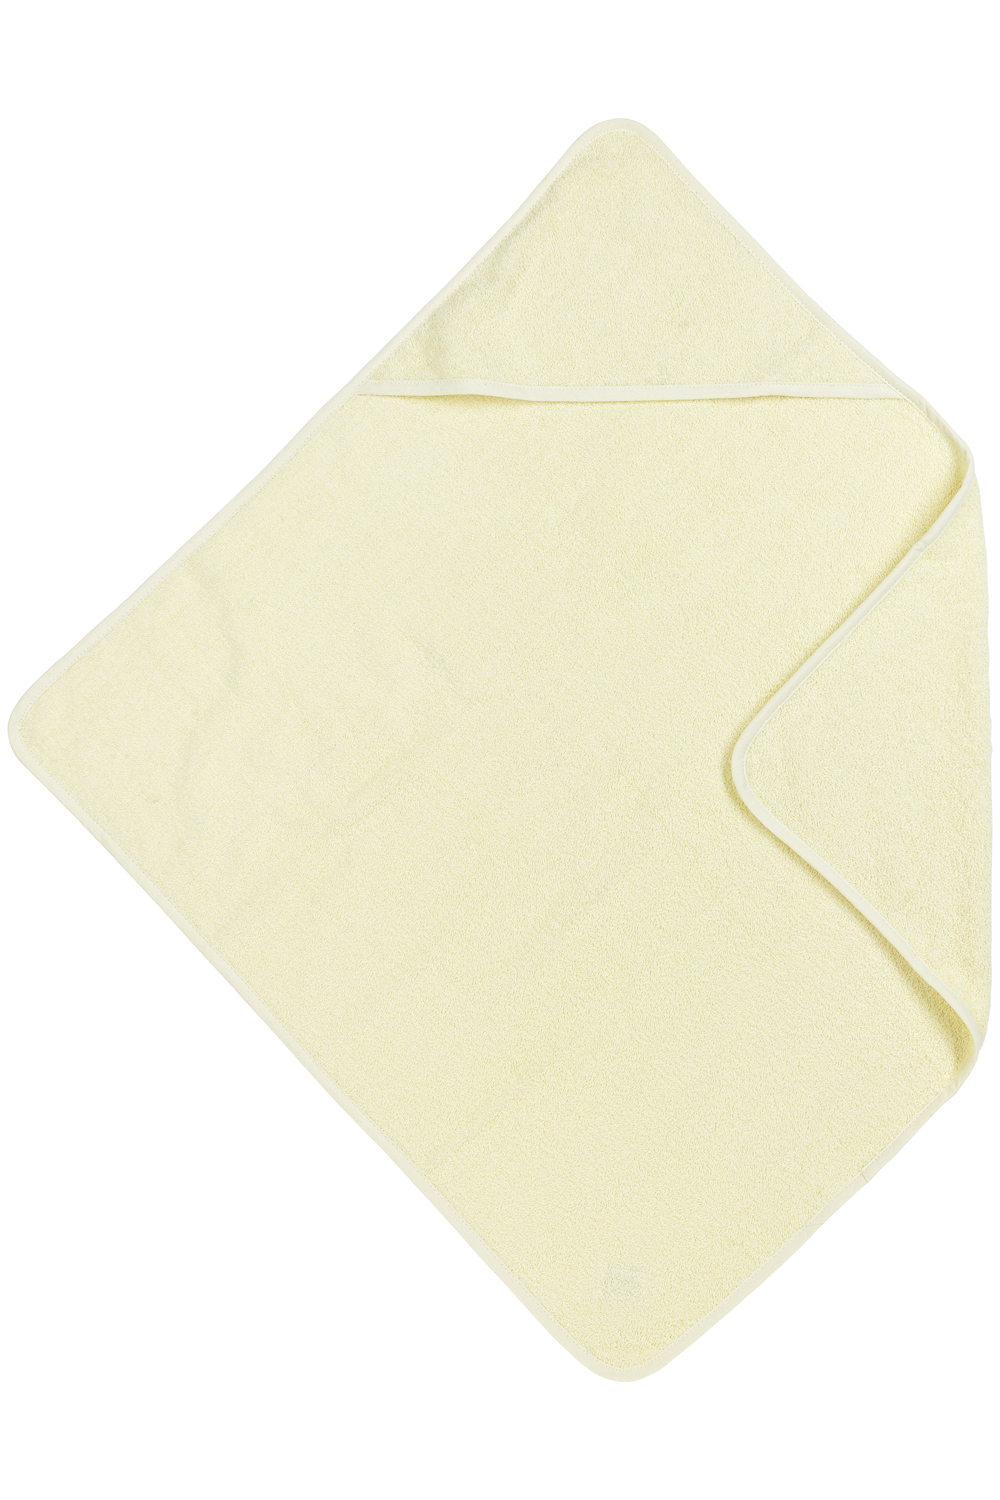 Bathcape Basic Terry - Soft Yellow - 75x75cm